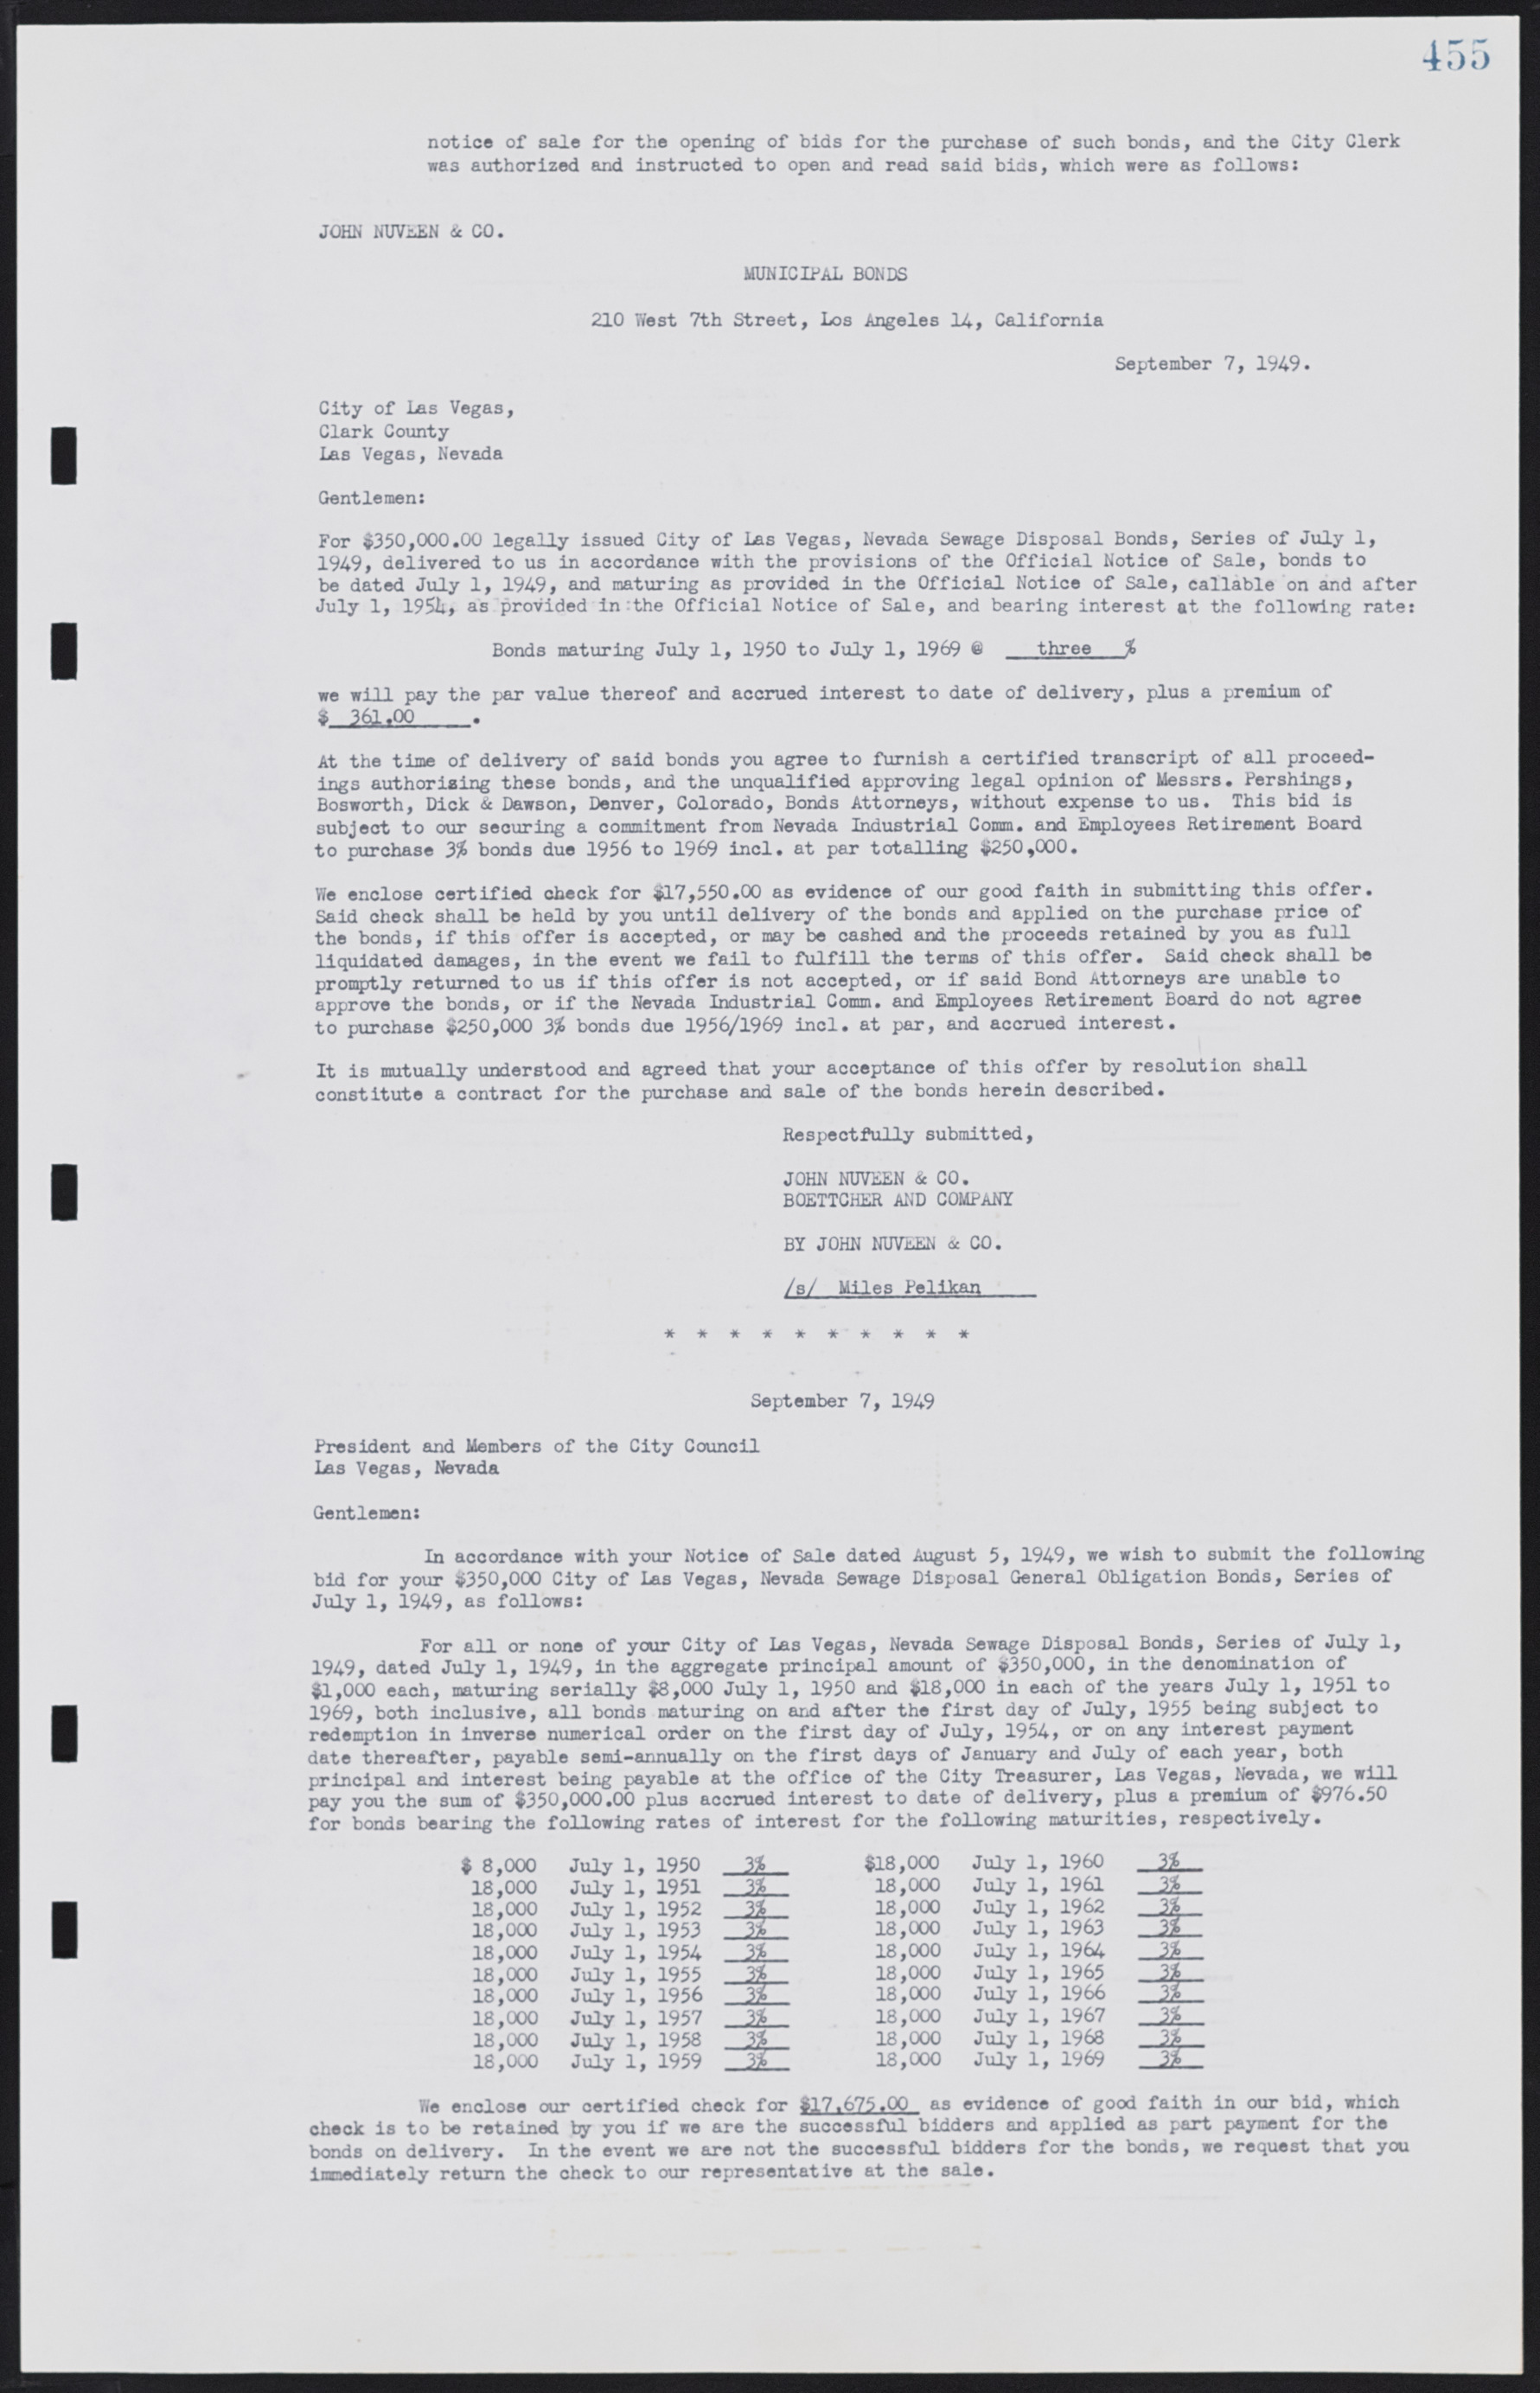 Las Vegas City Commission Minutes, January 7, 1947 to October 26, 1949, lvc000006-487